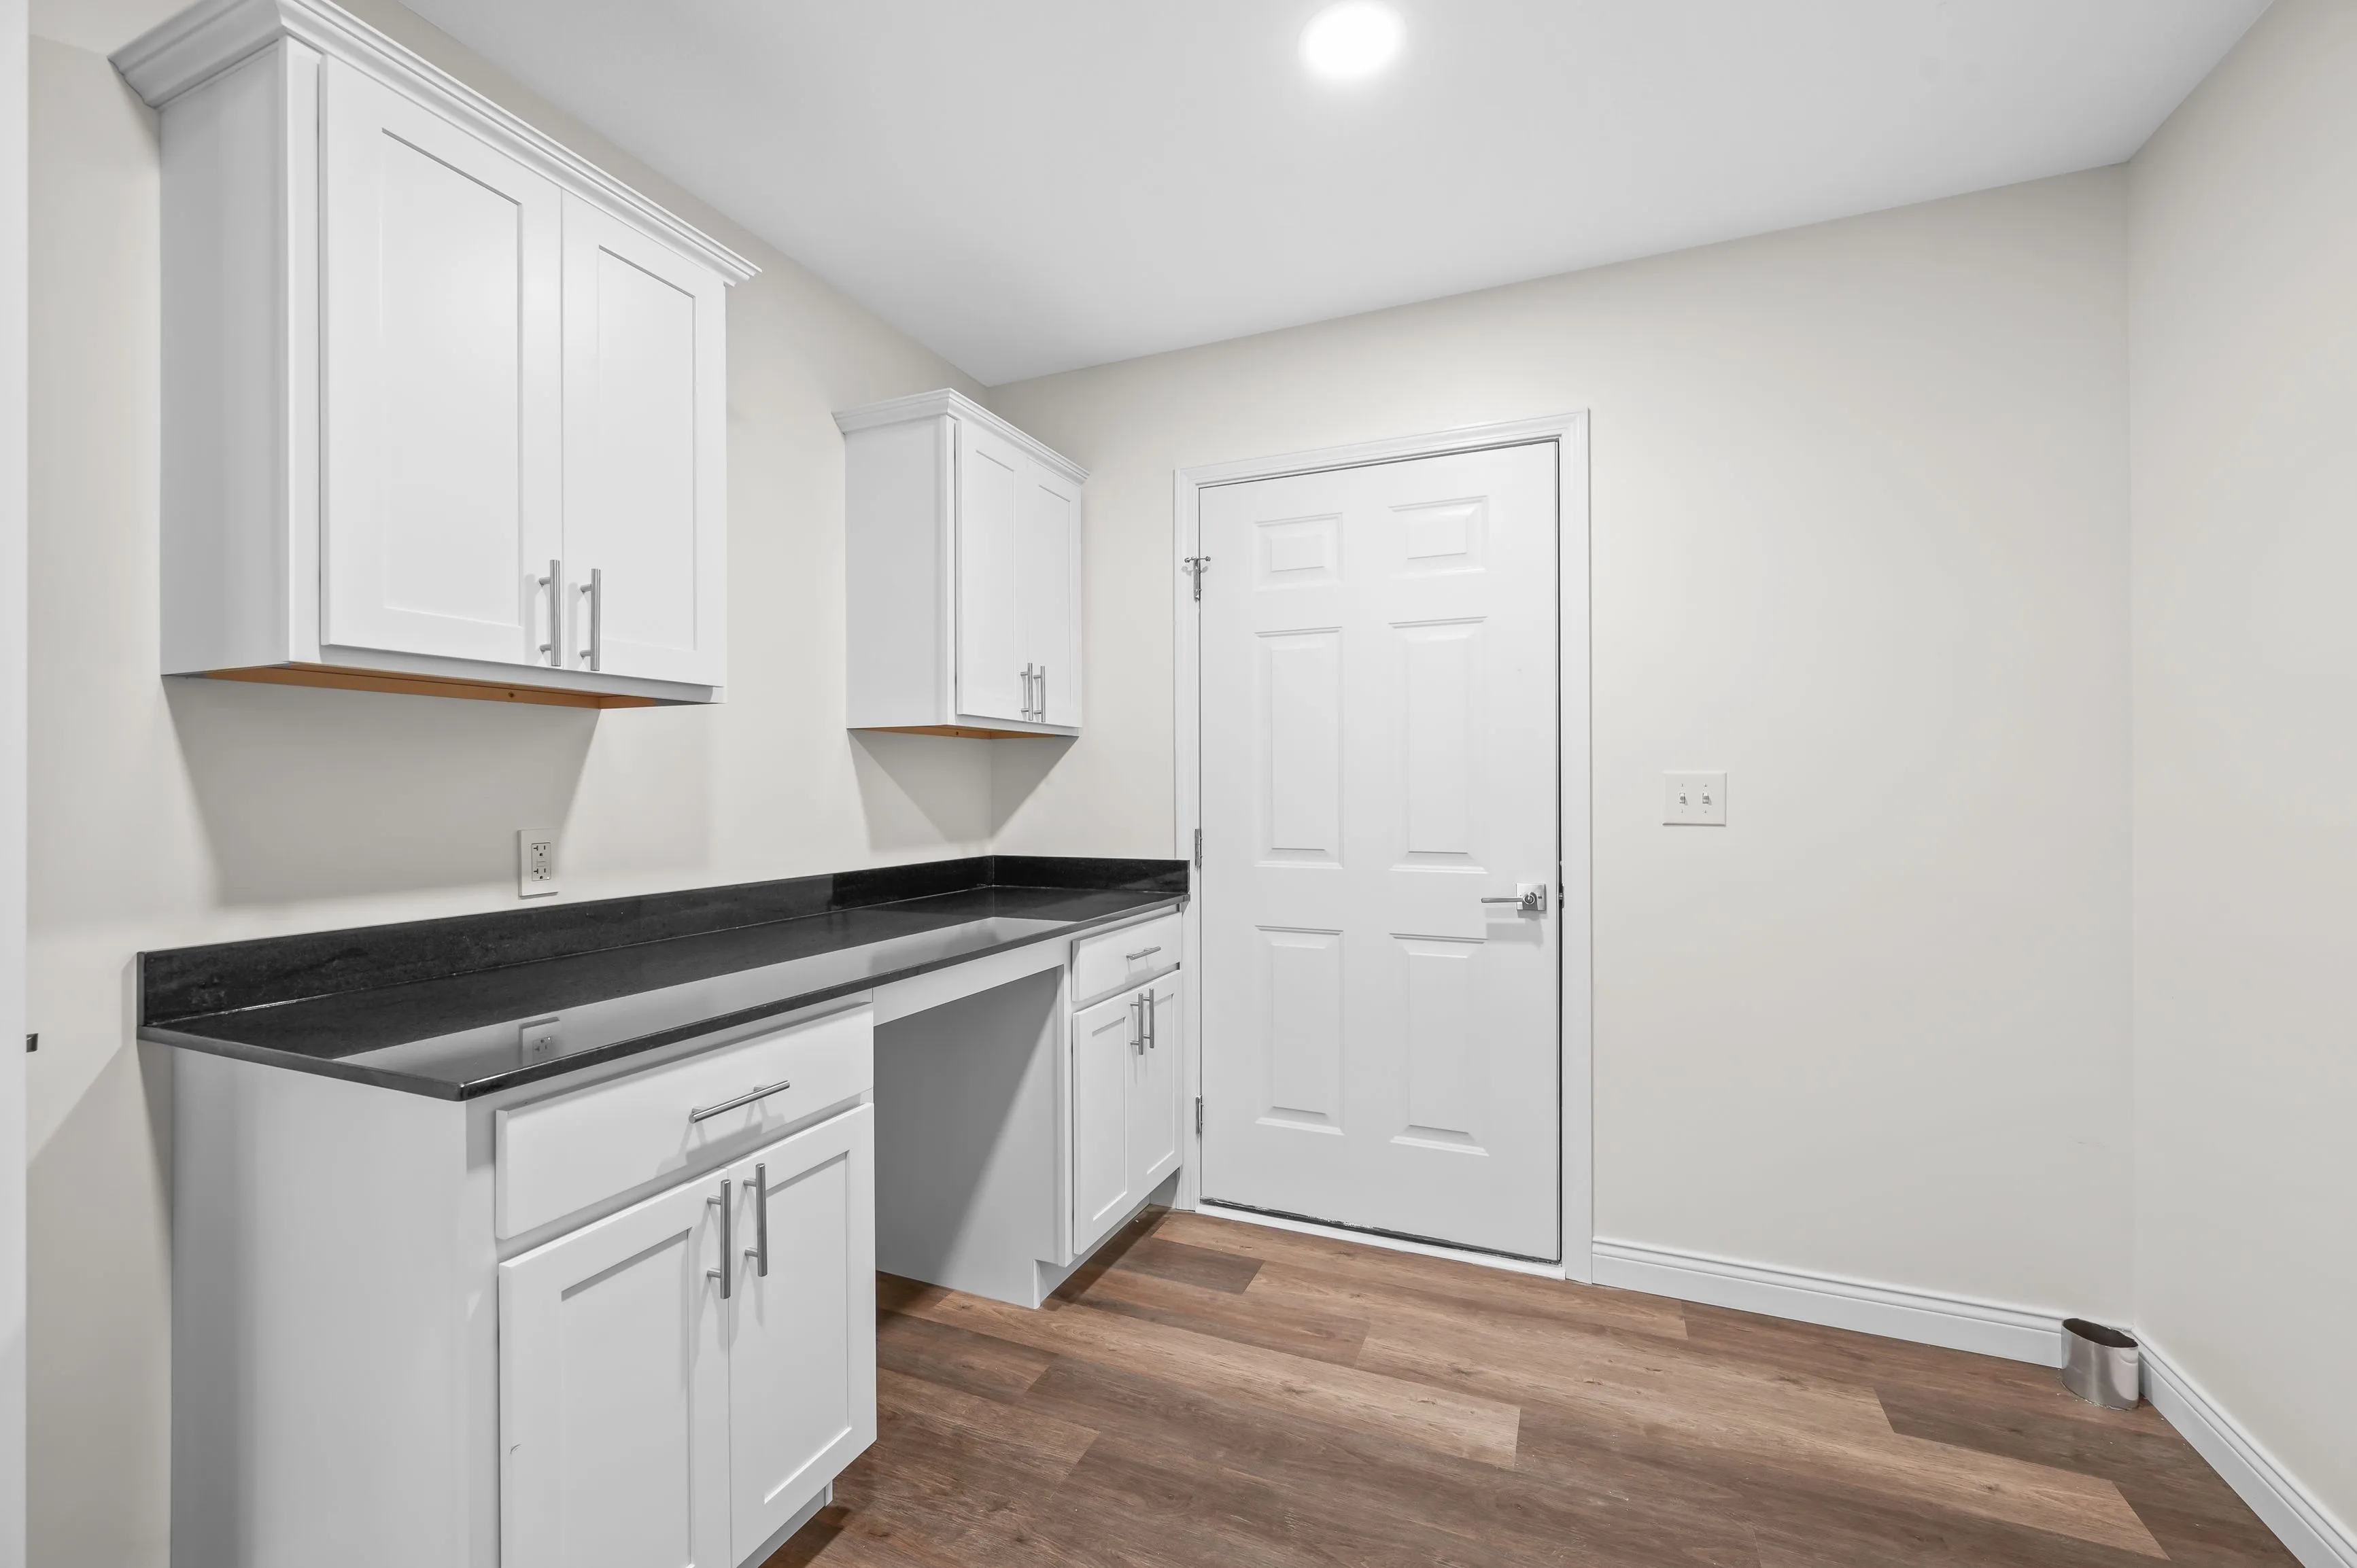 Modern kitchen corner with white cabinetry, dark countertops, and hardwood flooring.